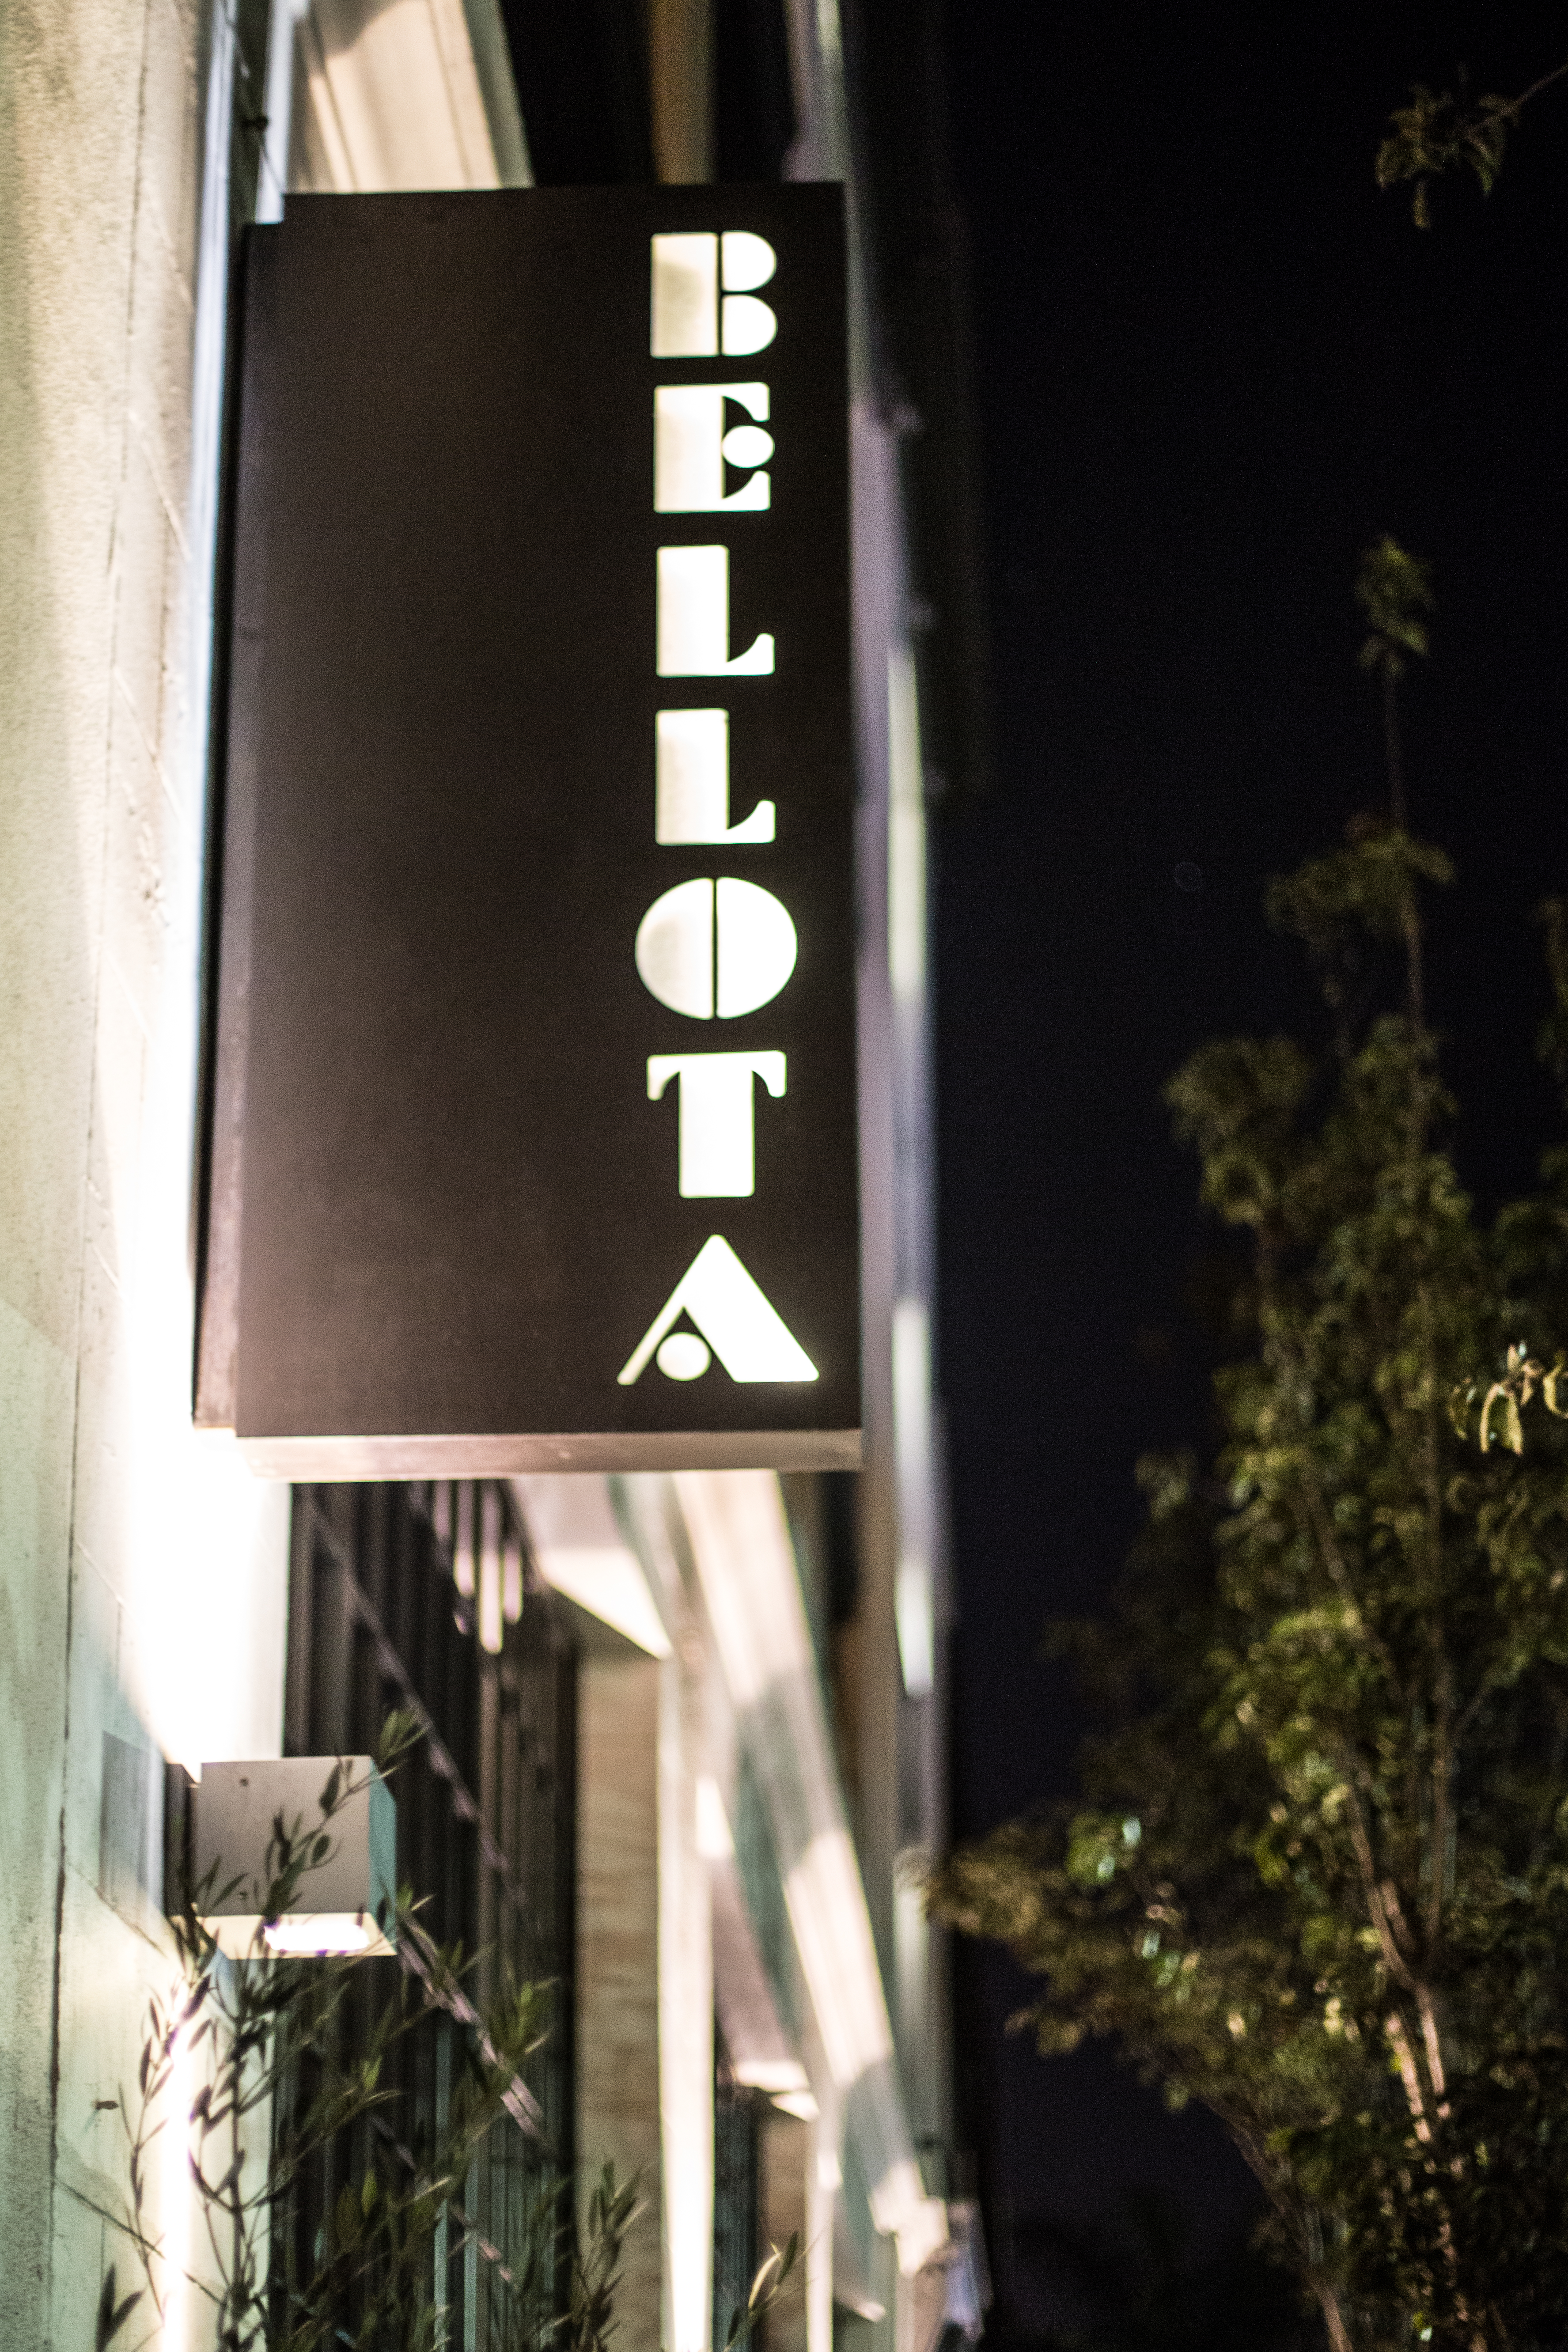 Bellota-San-Francisco-12 Restaurants in San Francisco: Bellota